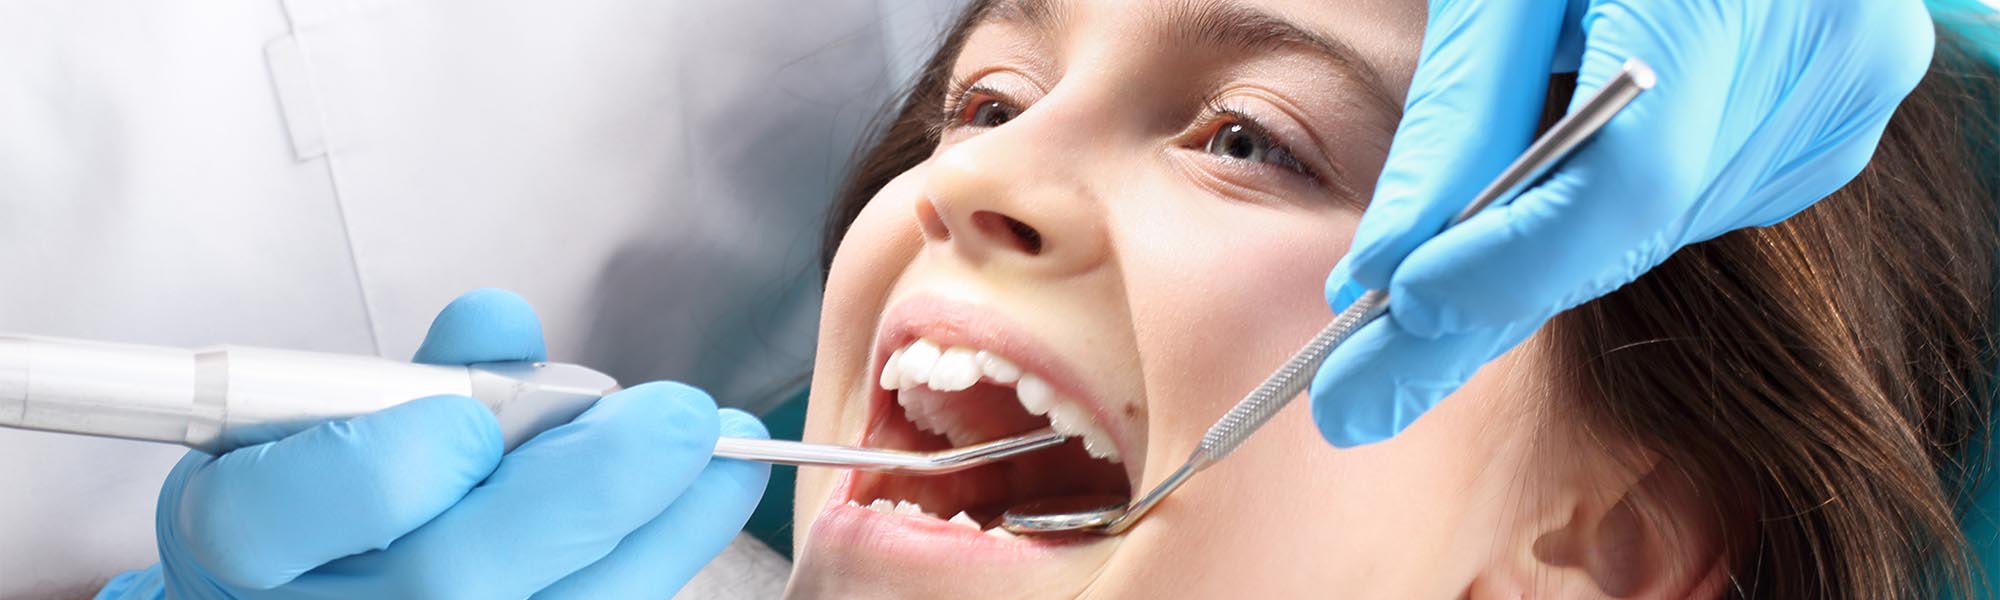 Dental Teeth Cleaning in Cerritos CA